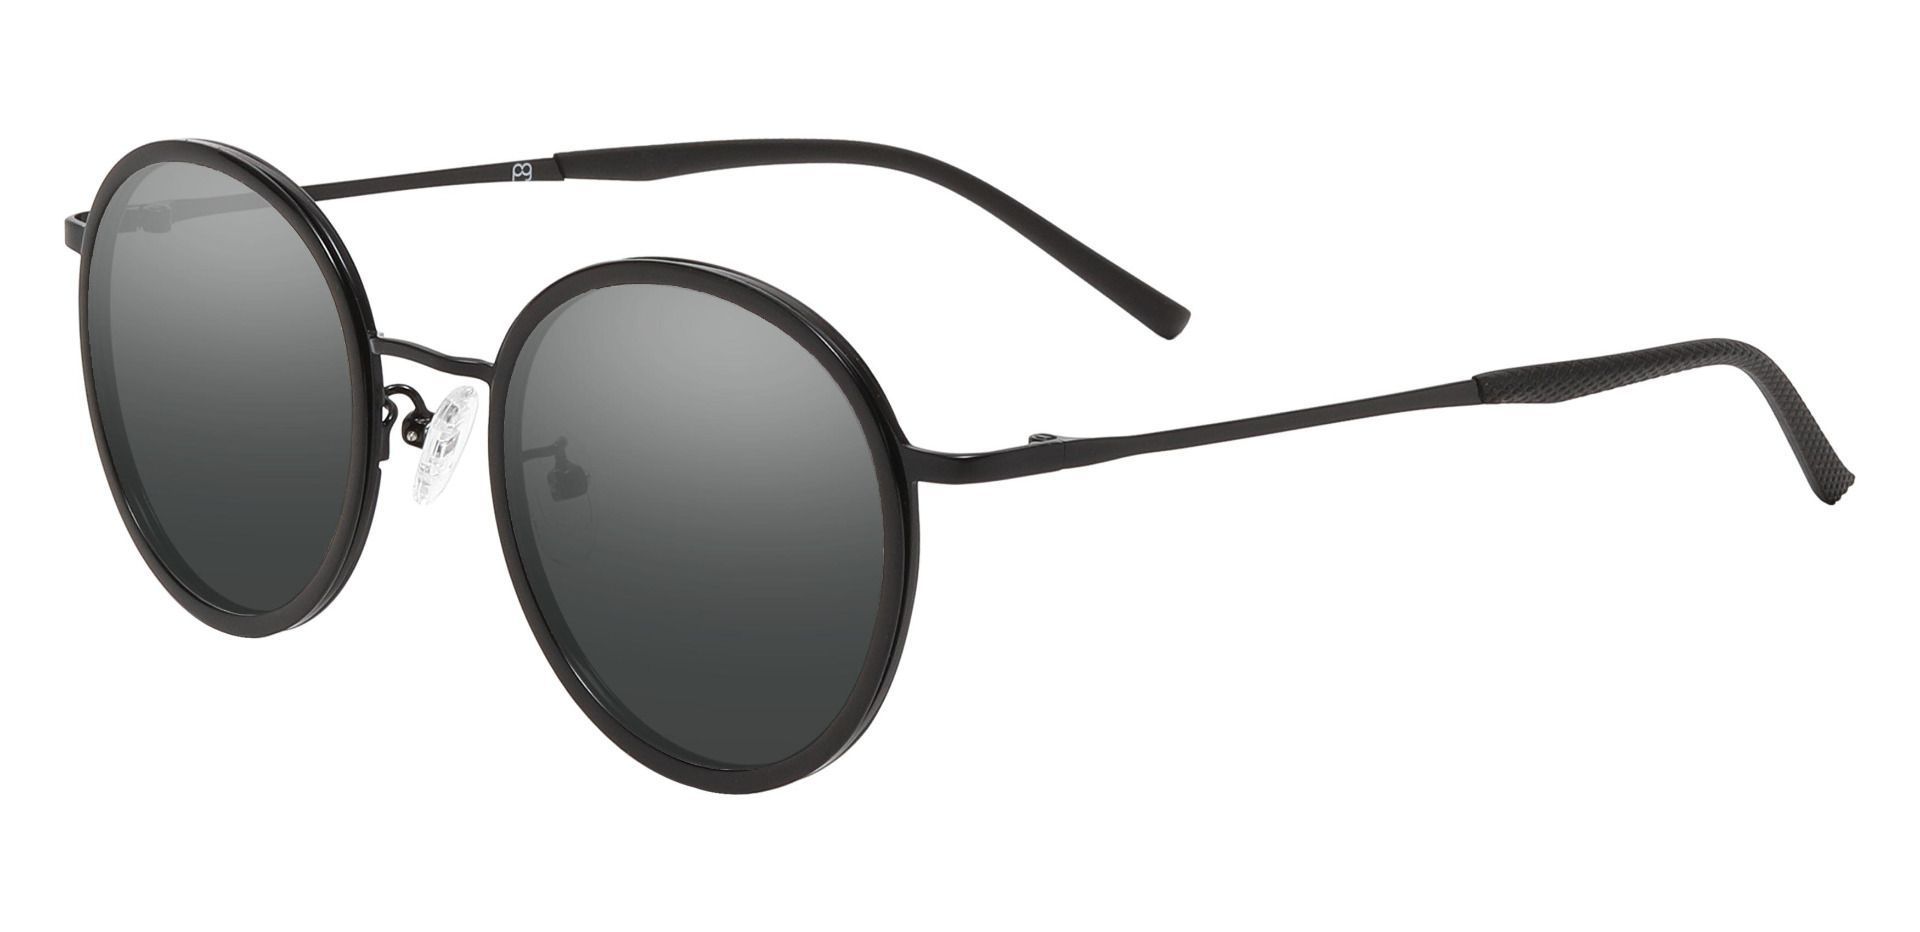 Brunswick Round Progressive Sunglasses - Black Frame With Gray Lenses